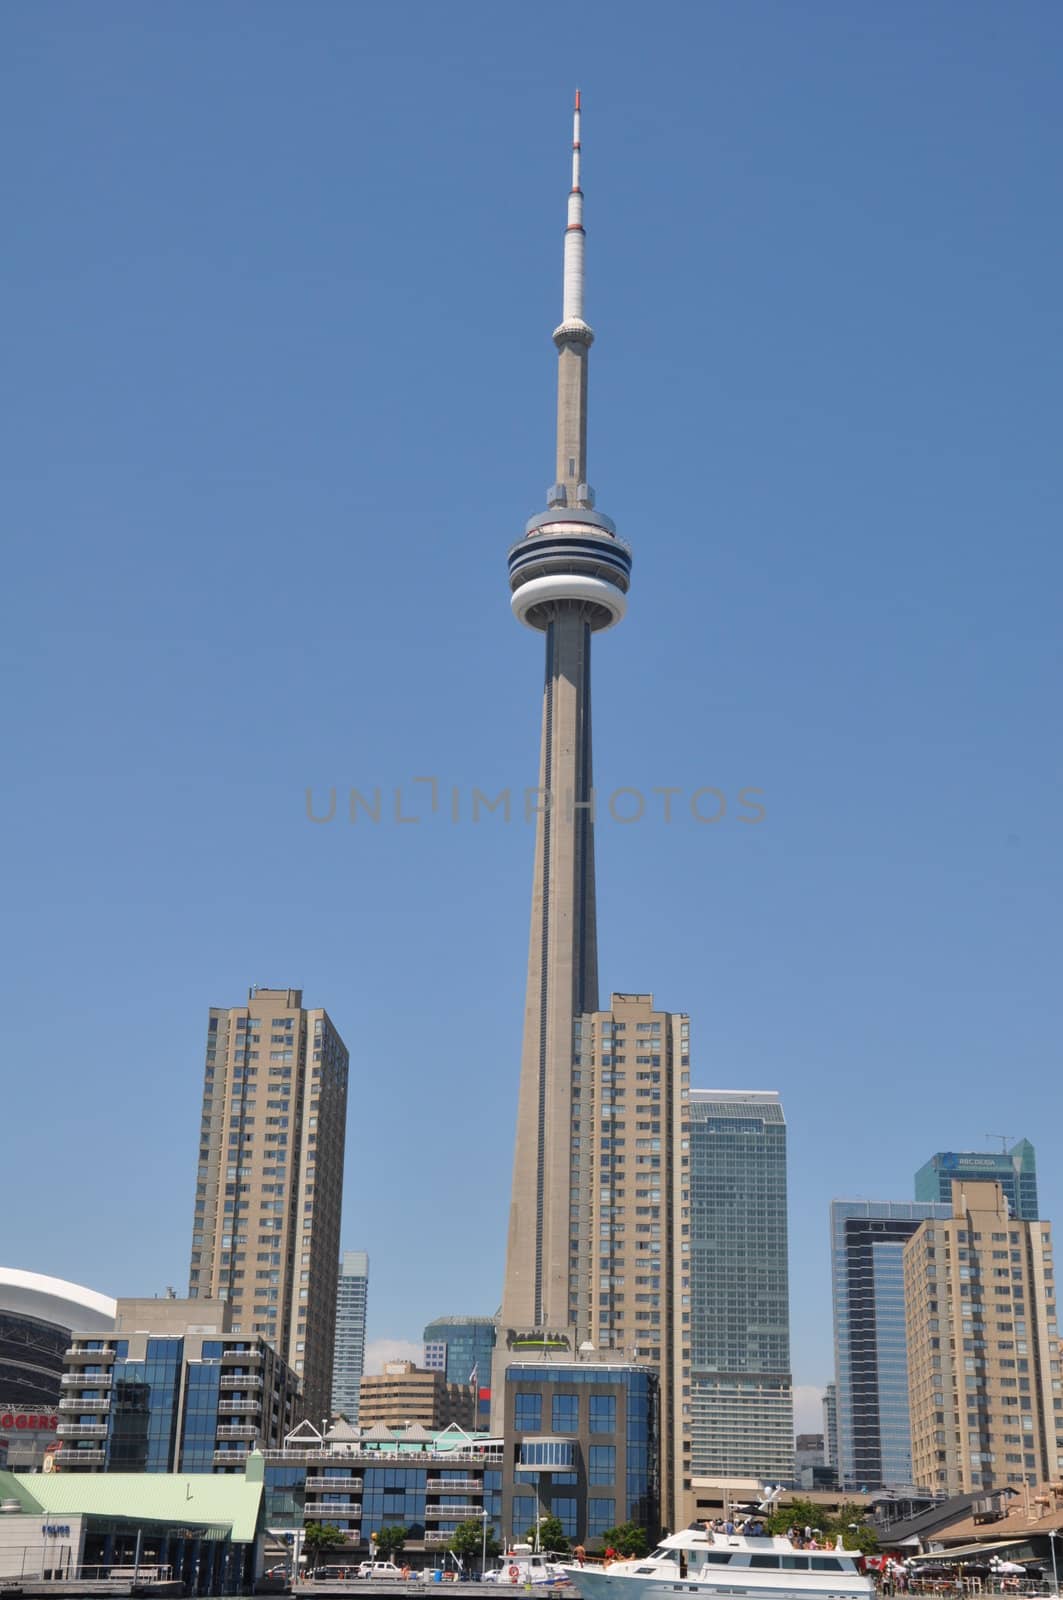 Toronto Skyline in Ontario, Canada